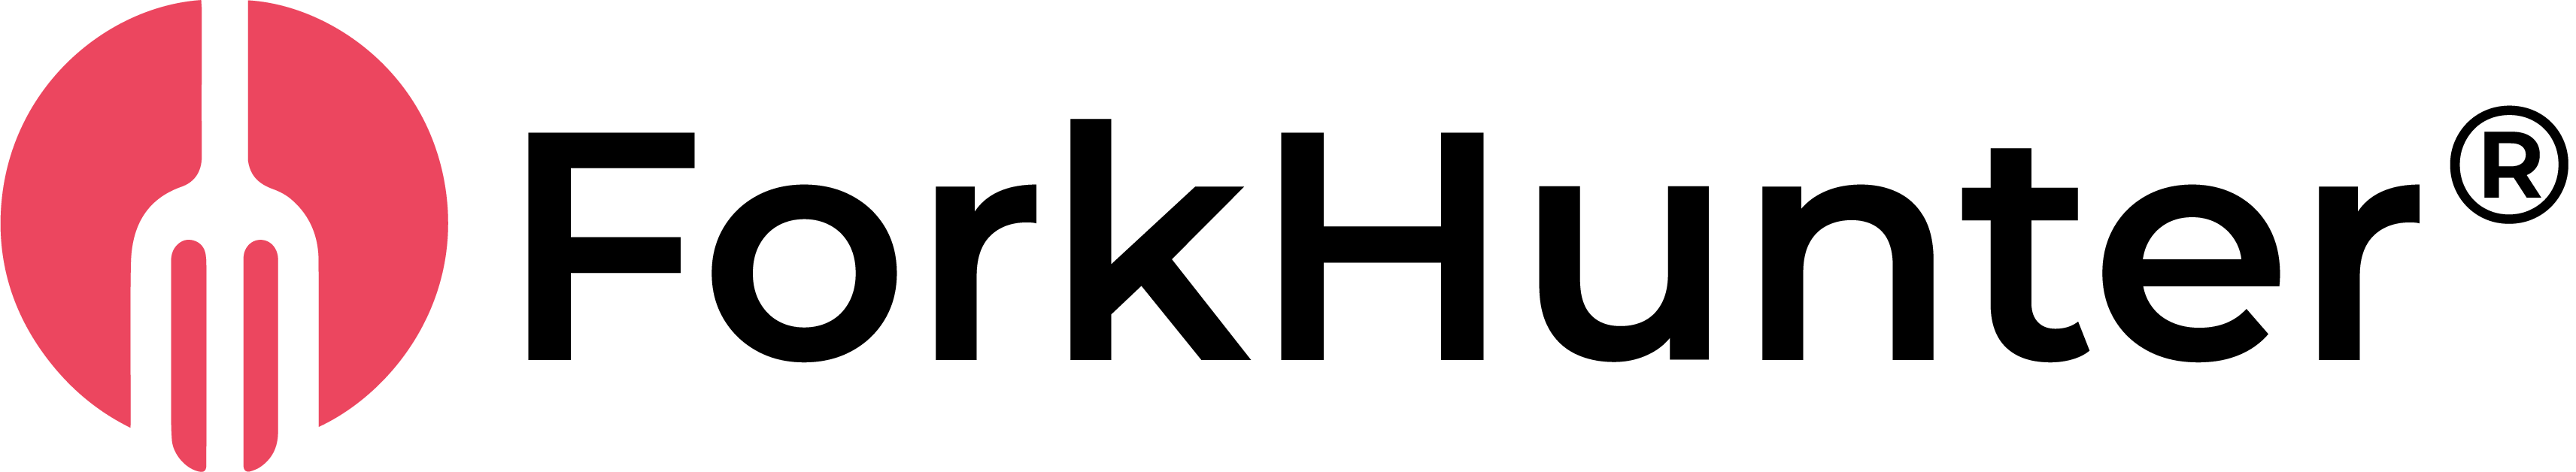 ForkHunter logo